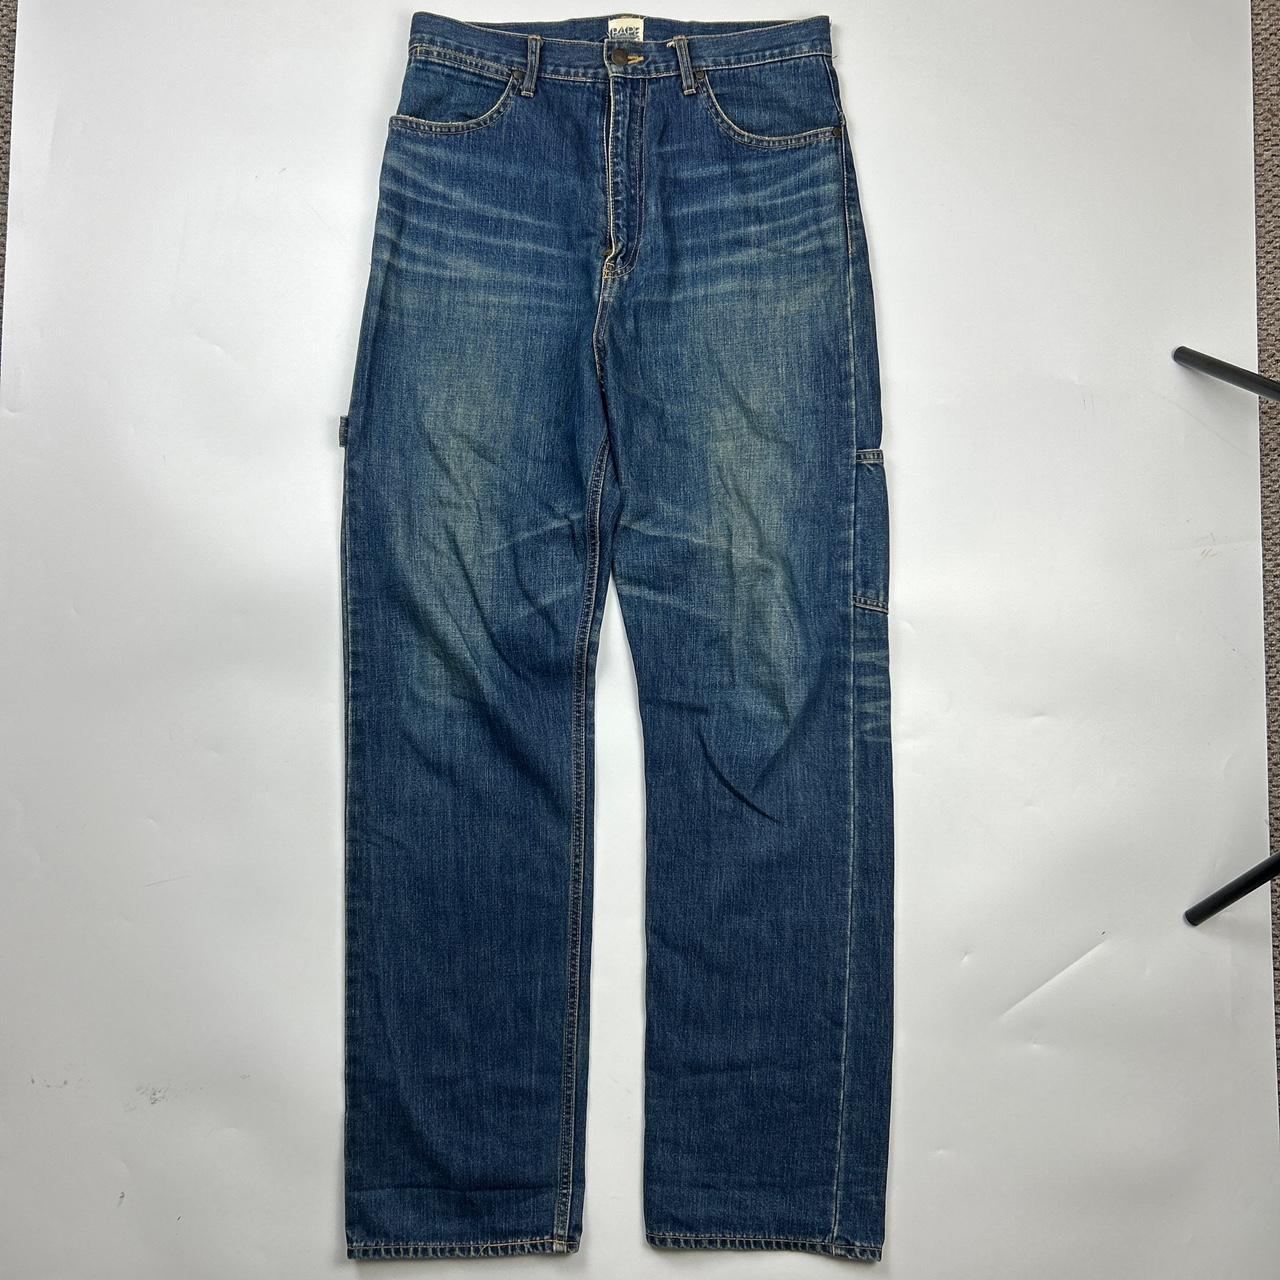 Bapesta Jeans (30")